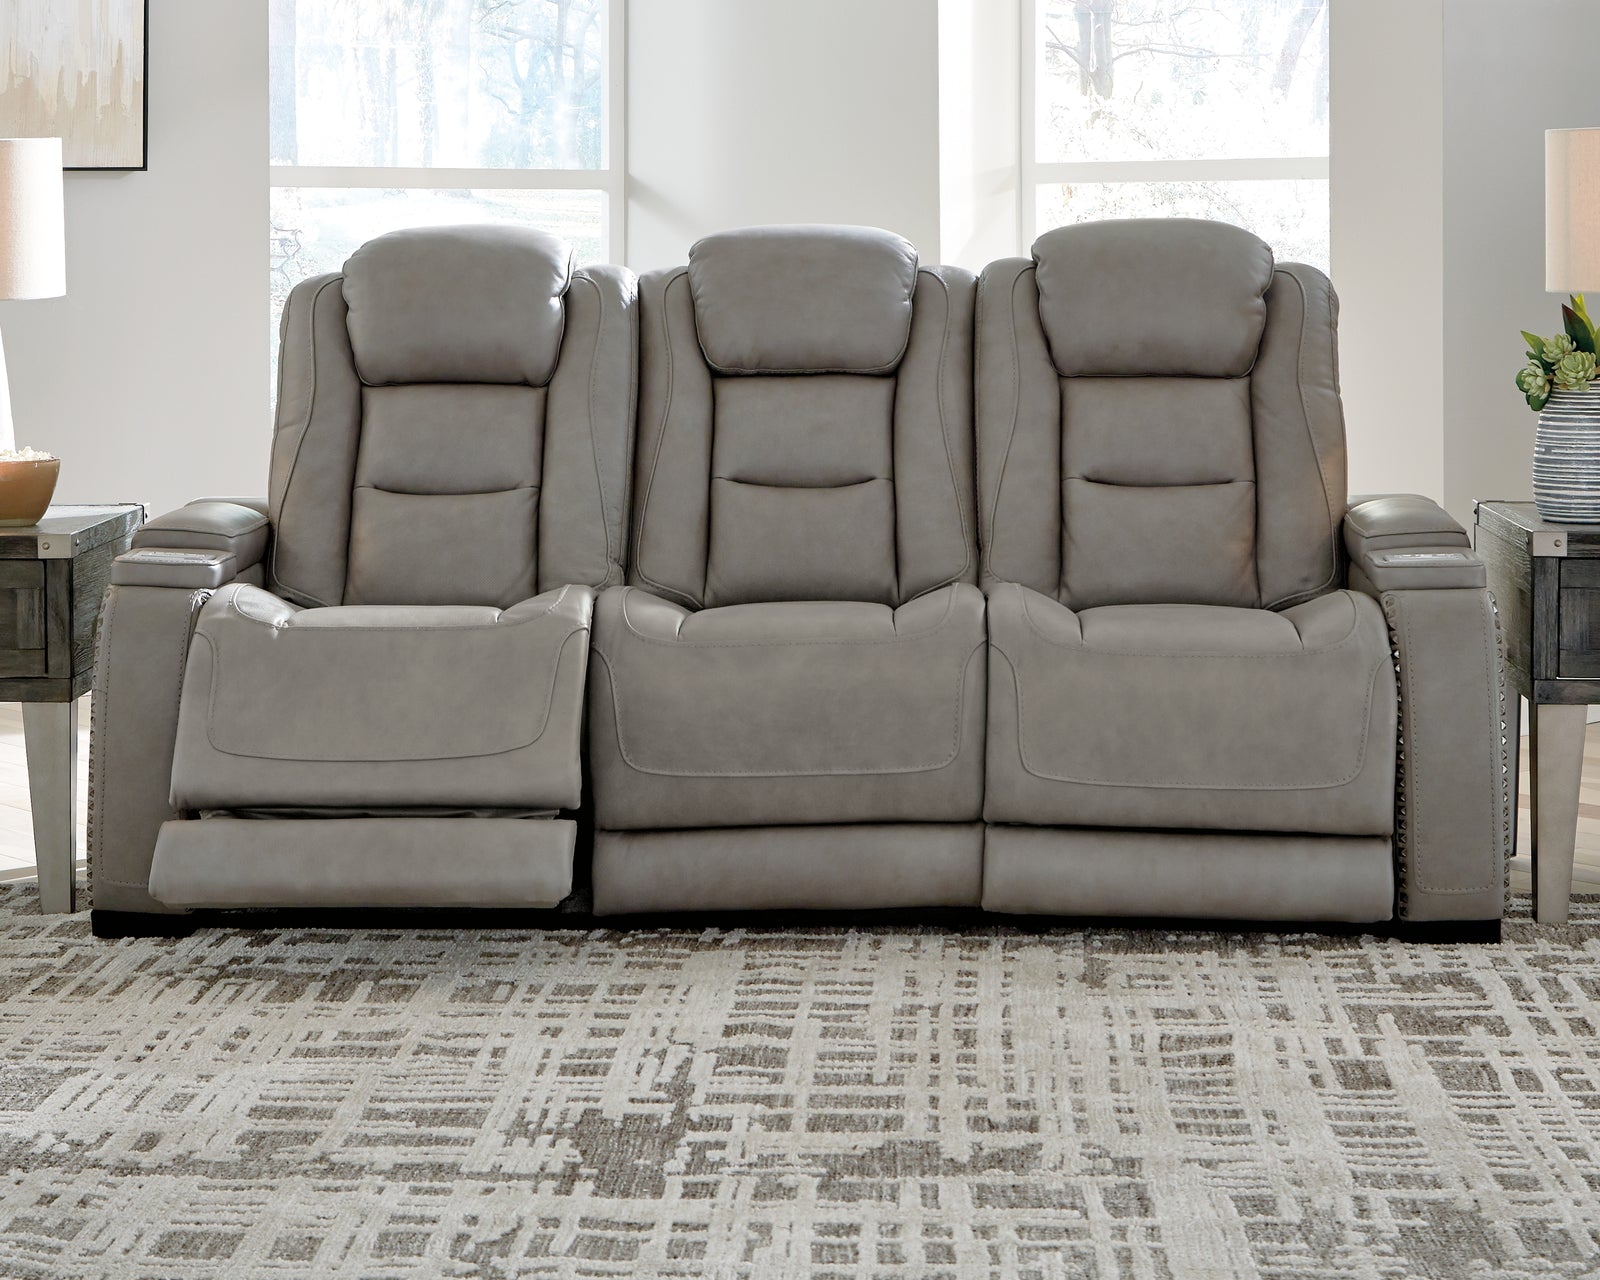 The Man-den Gray Leather Power Reclining Sofa